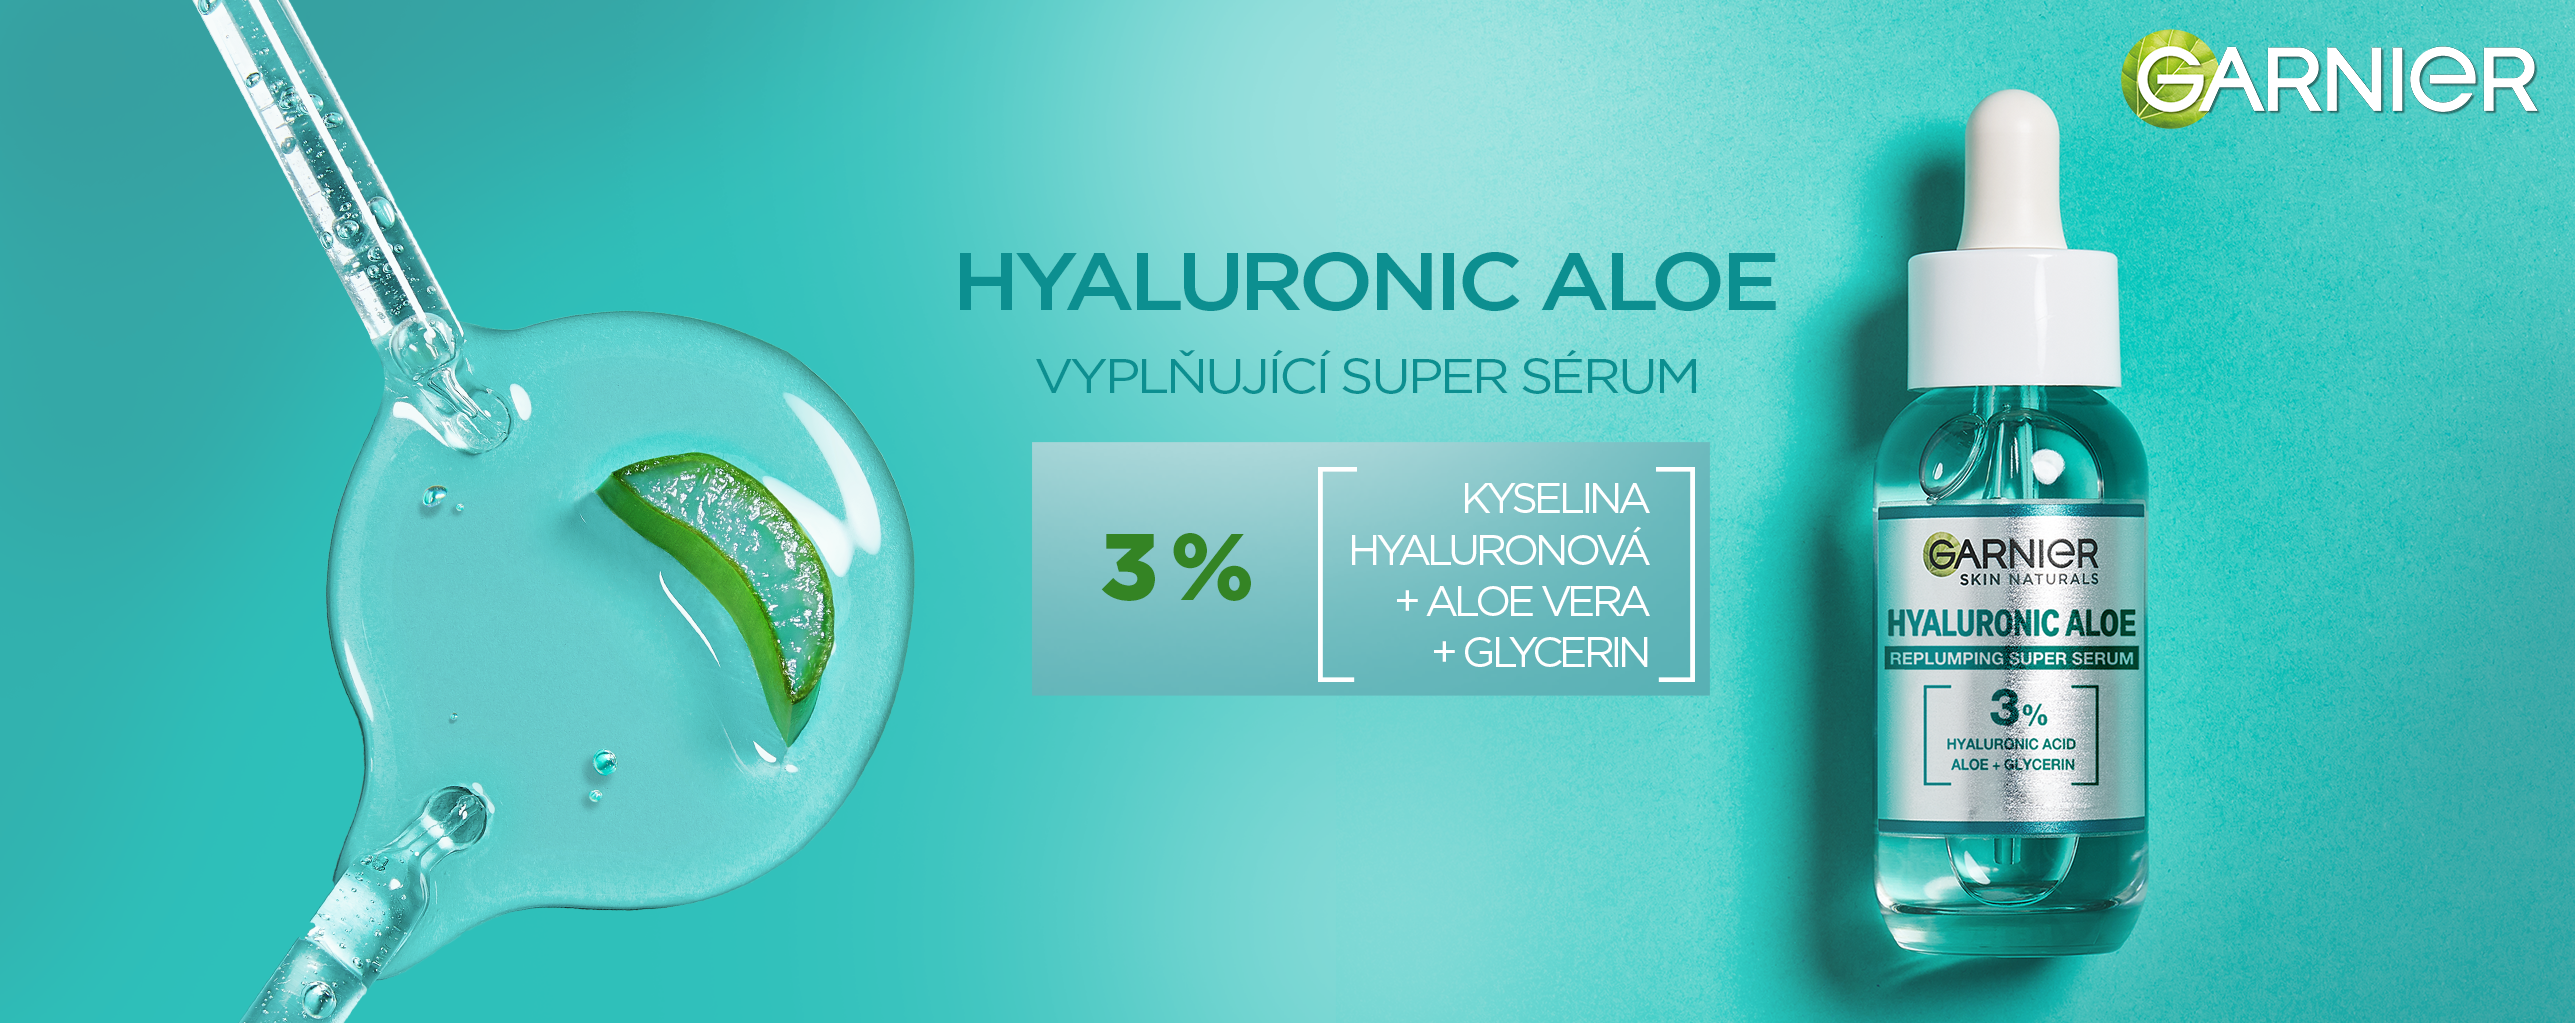 Garnier Hyaluronic Aloe Super Sérum 